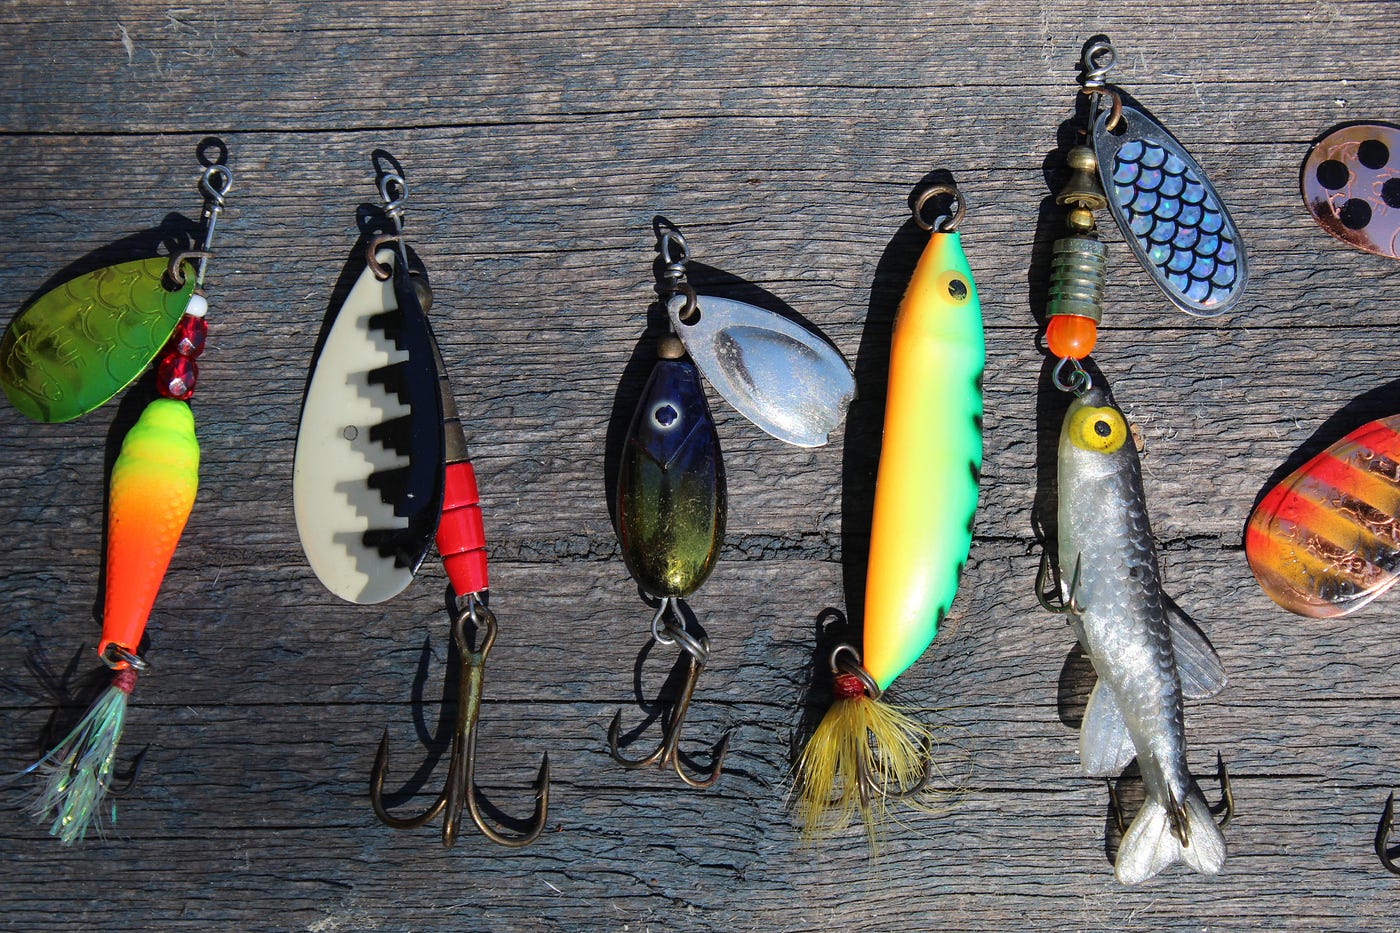 Fishing Gear Hacks: 3 Items All Anglers Need